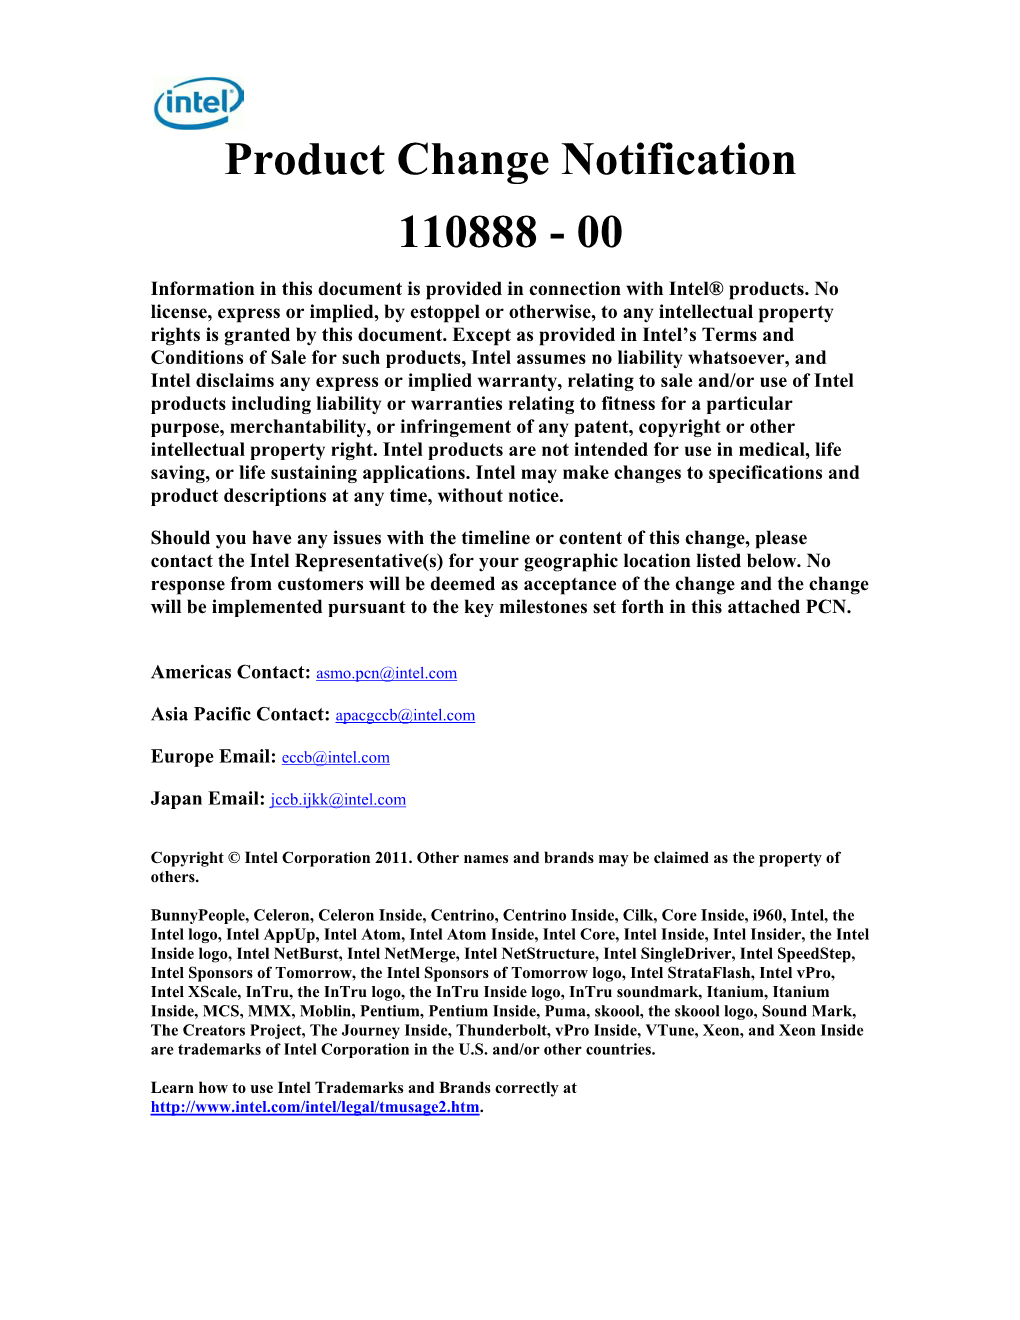 Product Change Notification 110888